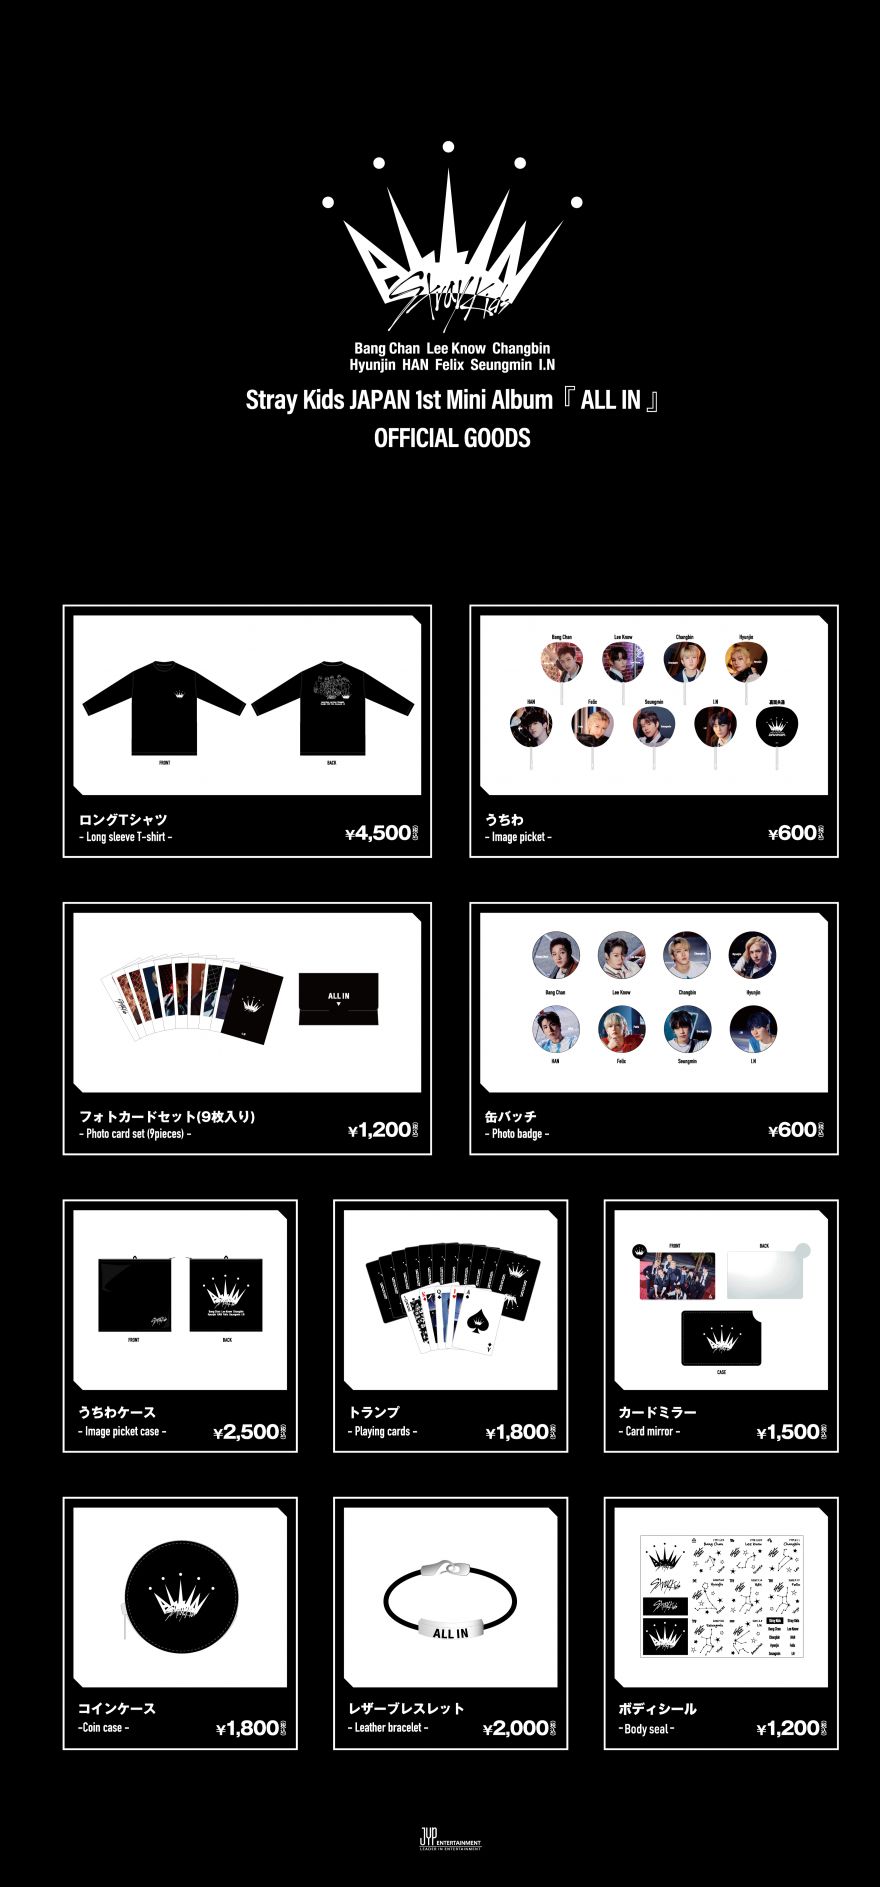 Stray Kids JAPAN 1st Mini Album『ALL IN』リリース記念スペシャルグッズのSony Music Shop通販